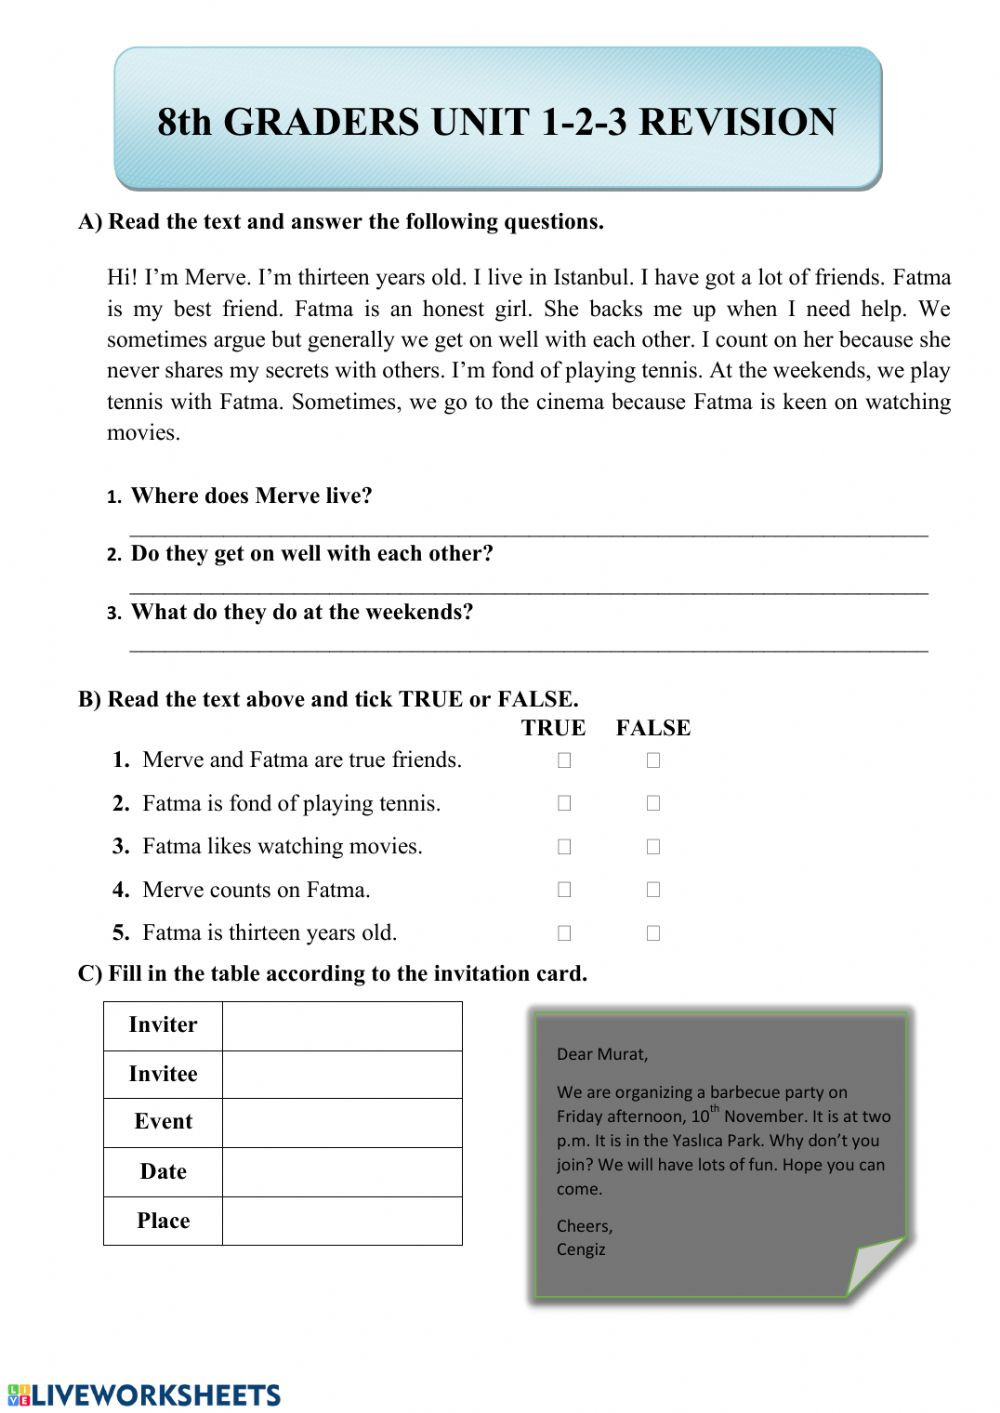 8th Grade English Worksheets 8th Grade Revision for Units 1 2 3 Interactive Worksheet